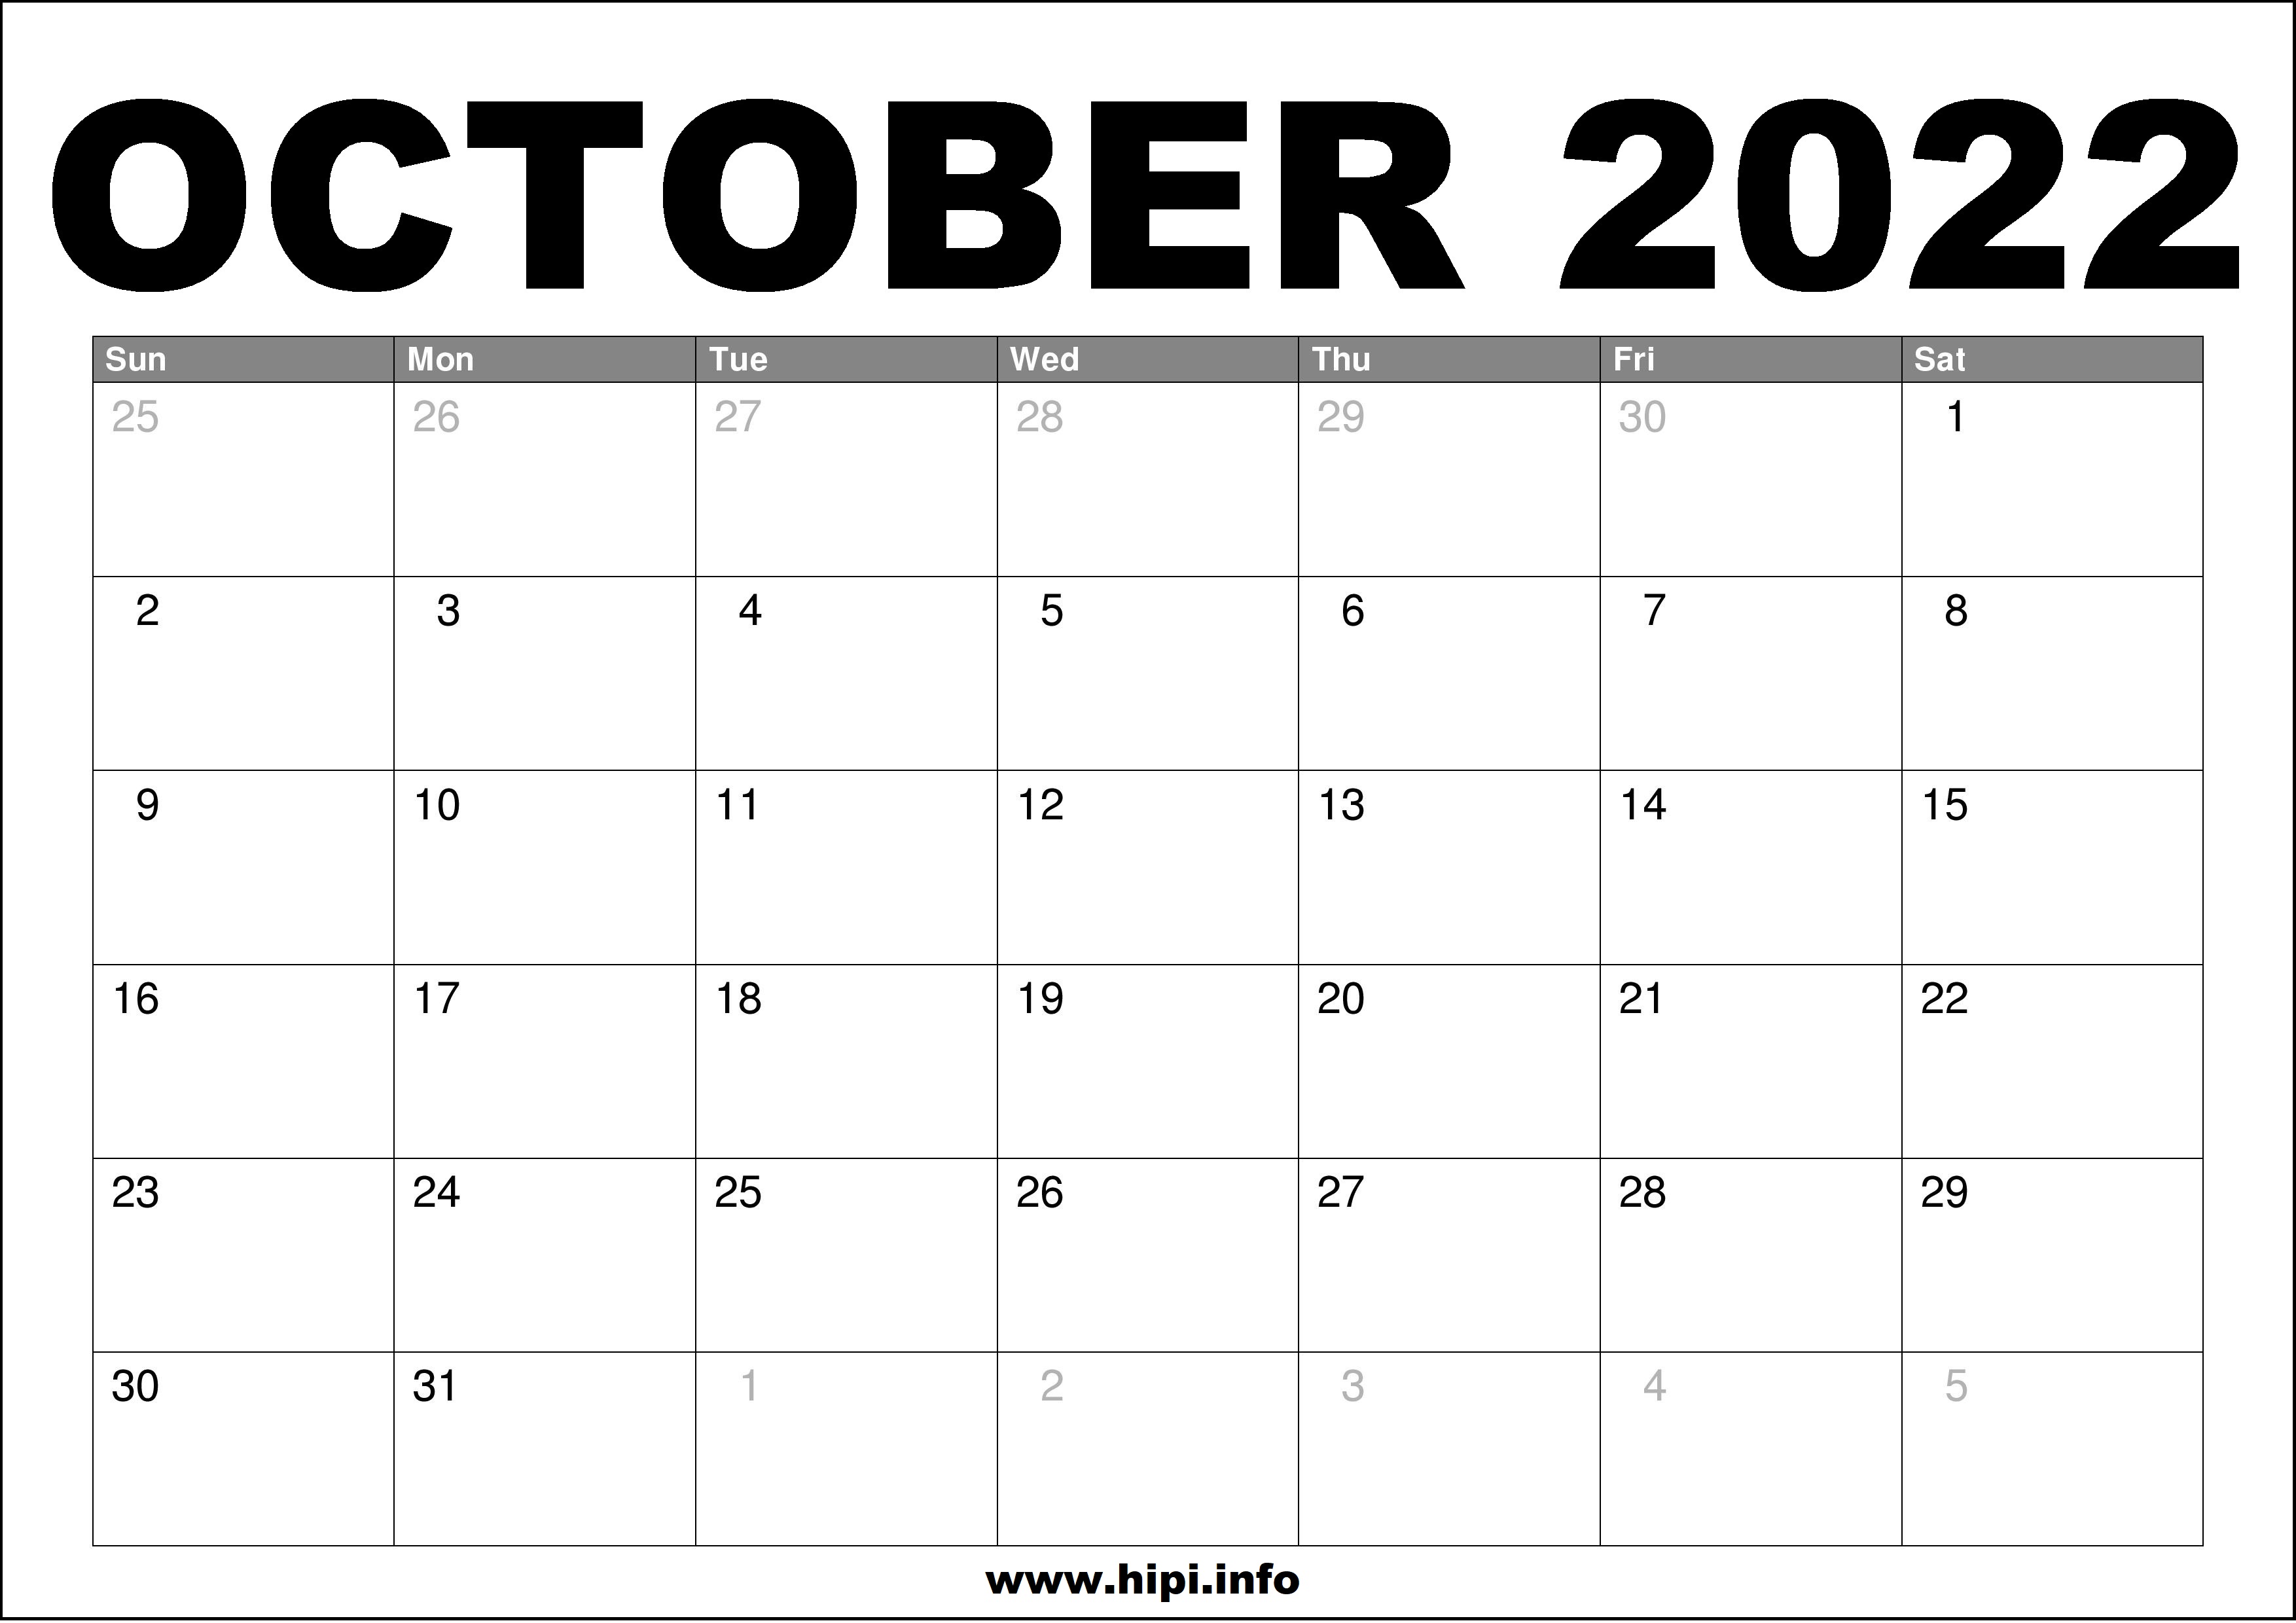 October 2022 Calendar Printable Free October 2022 Calendar Printable Free - Hipi.info | Calendars Printable Free